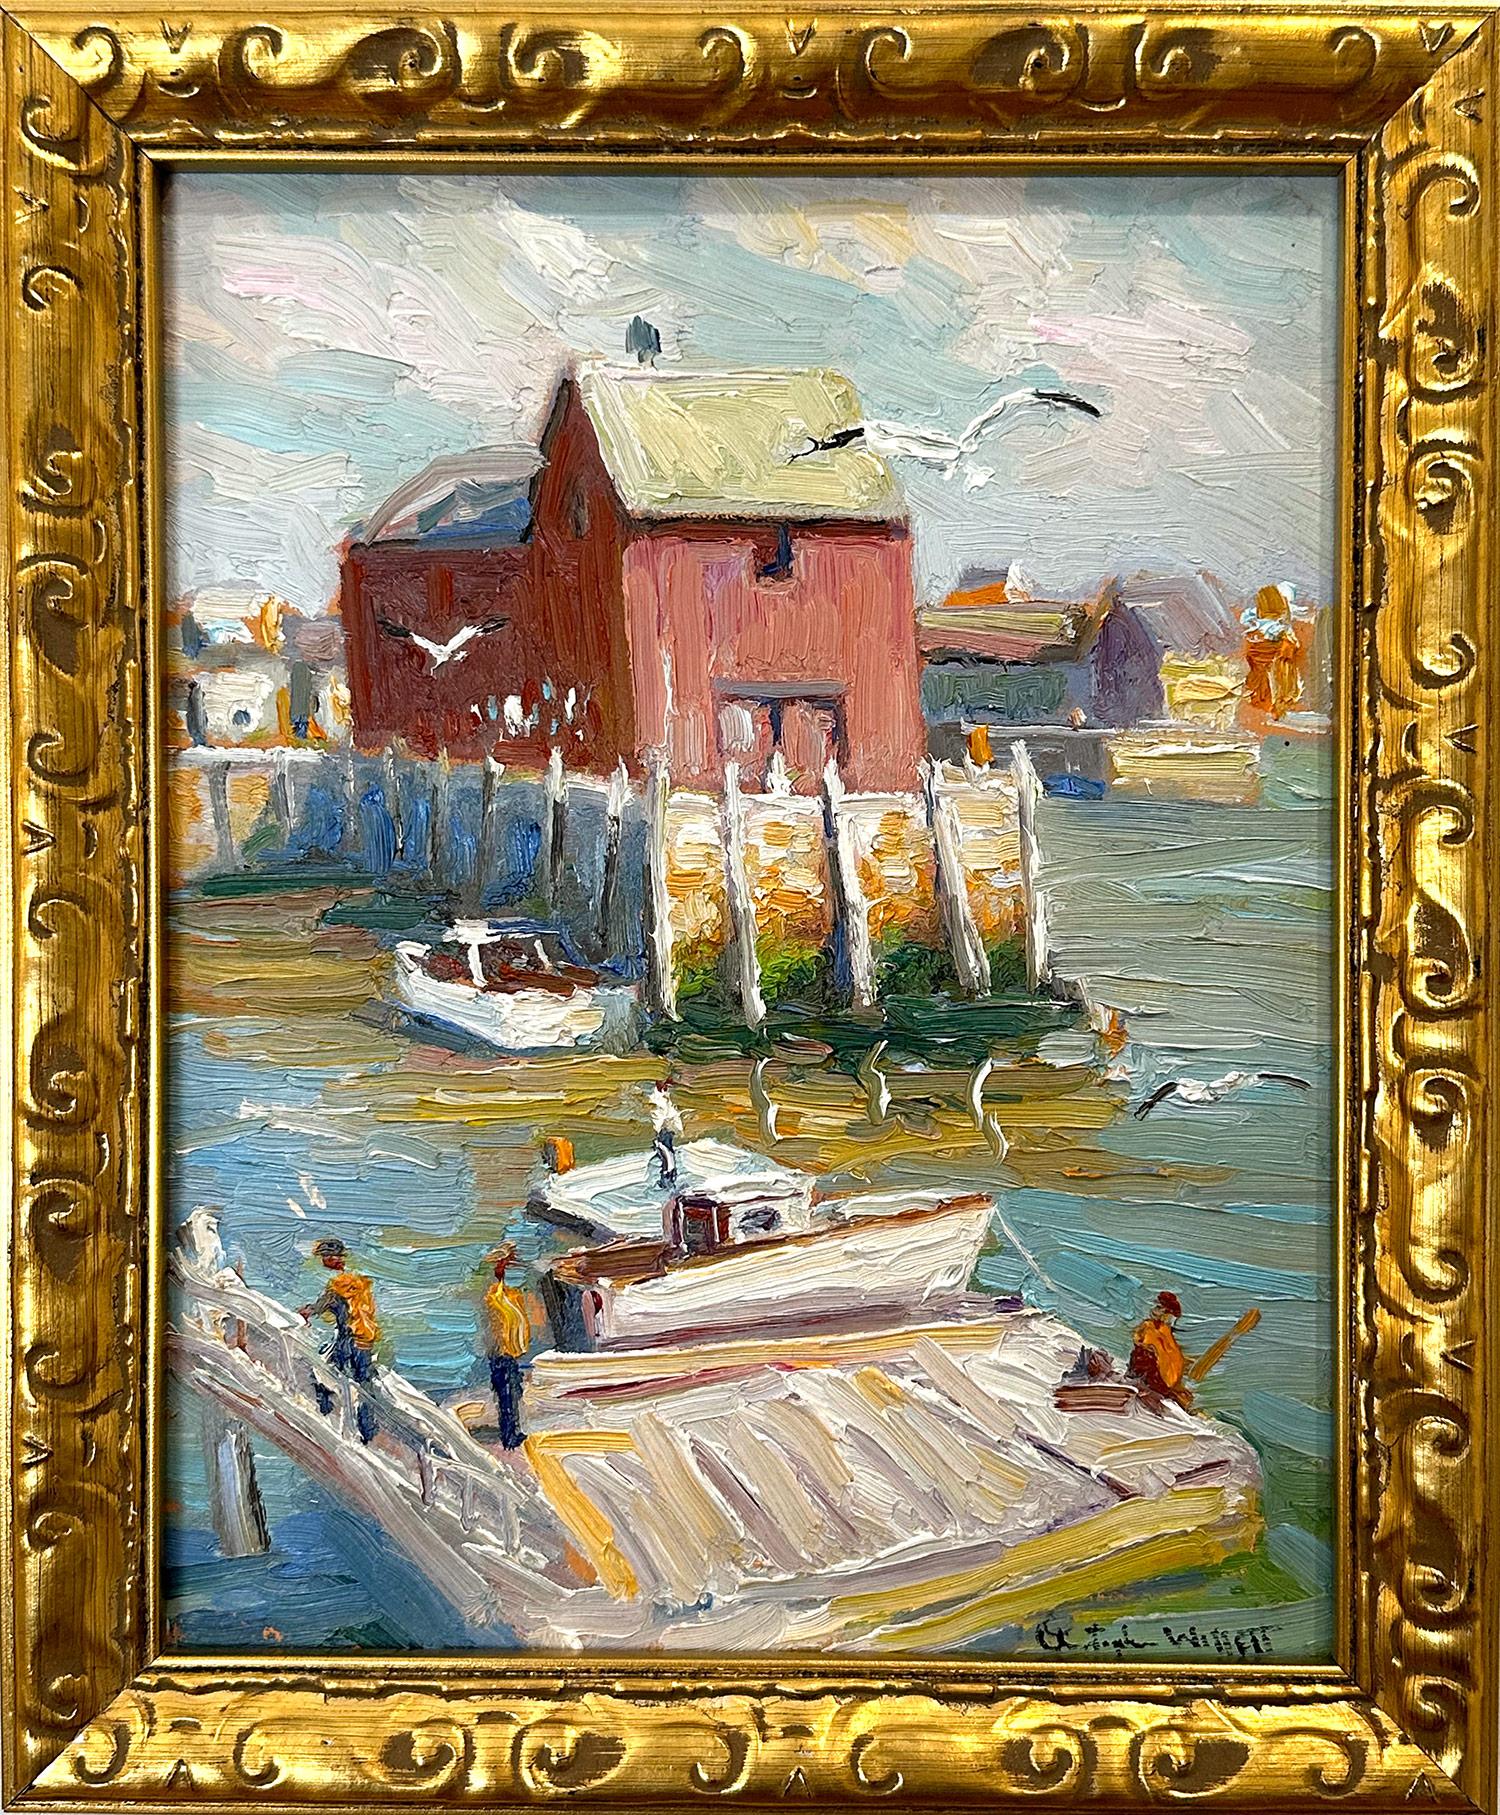 Christopher Willett Figurative Painting – "Motif #1" Rockport Massachusetts Fishermen by the Seaport Docks Oil Painting